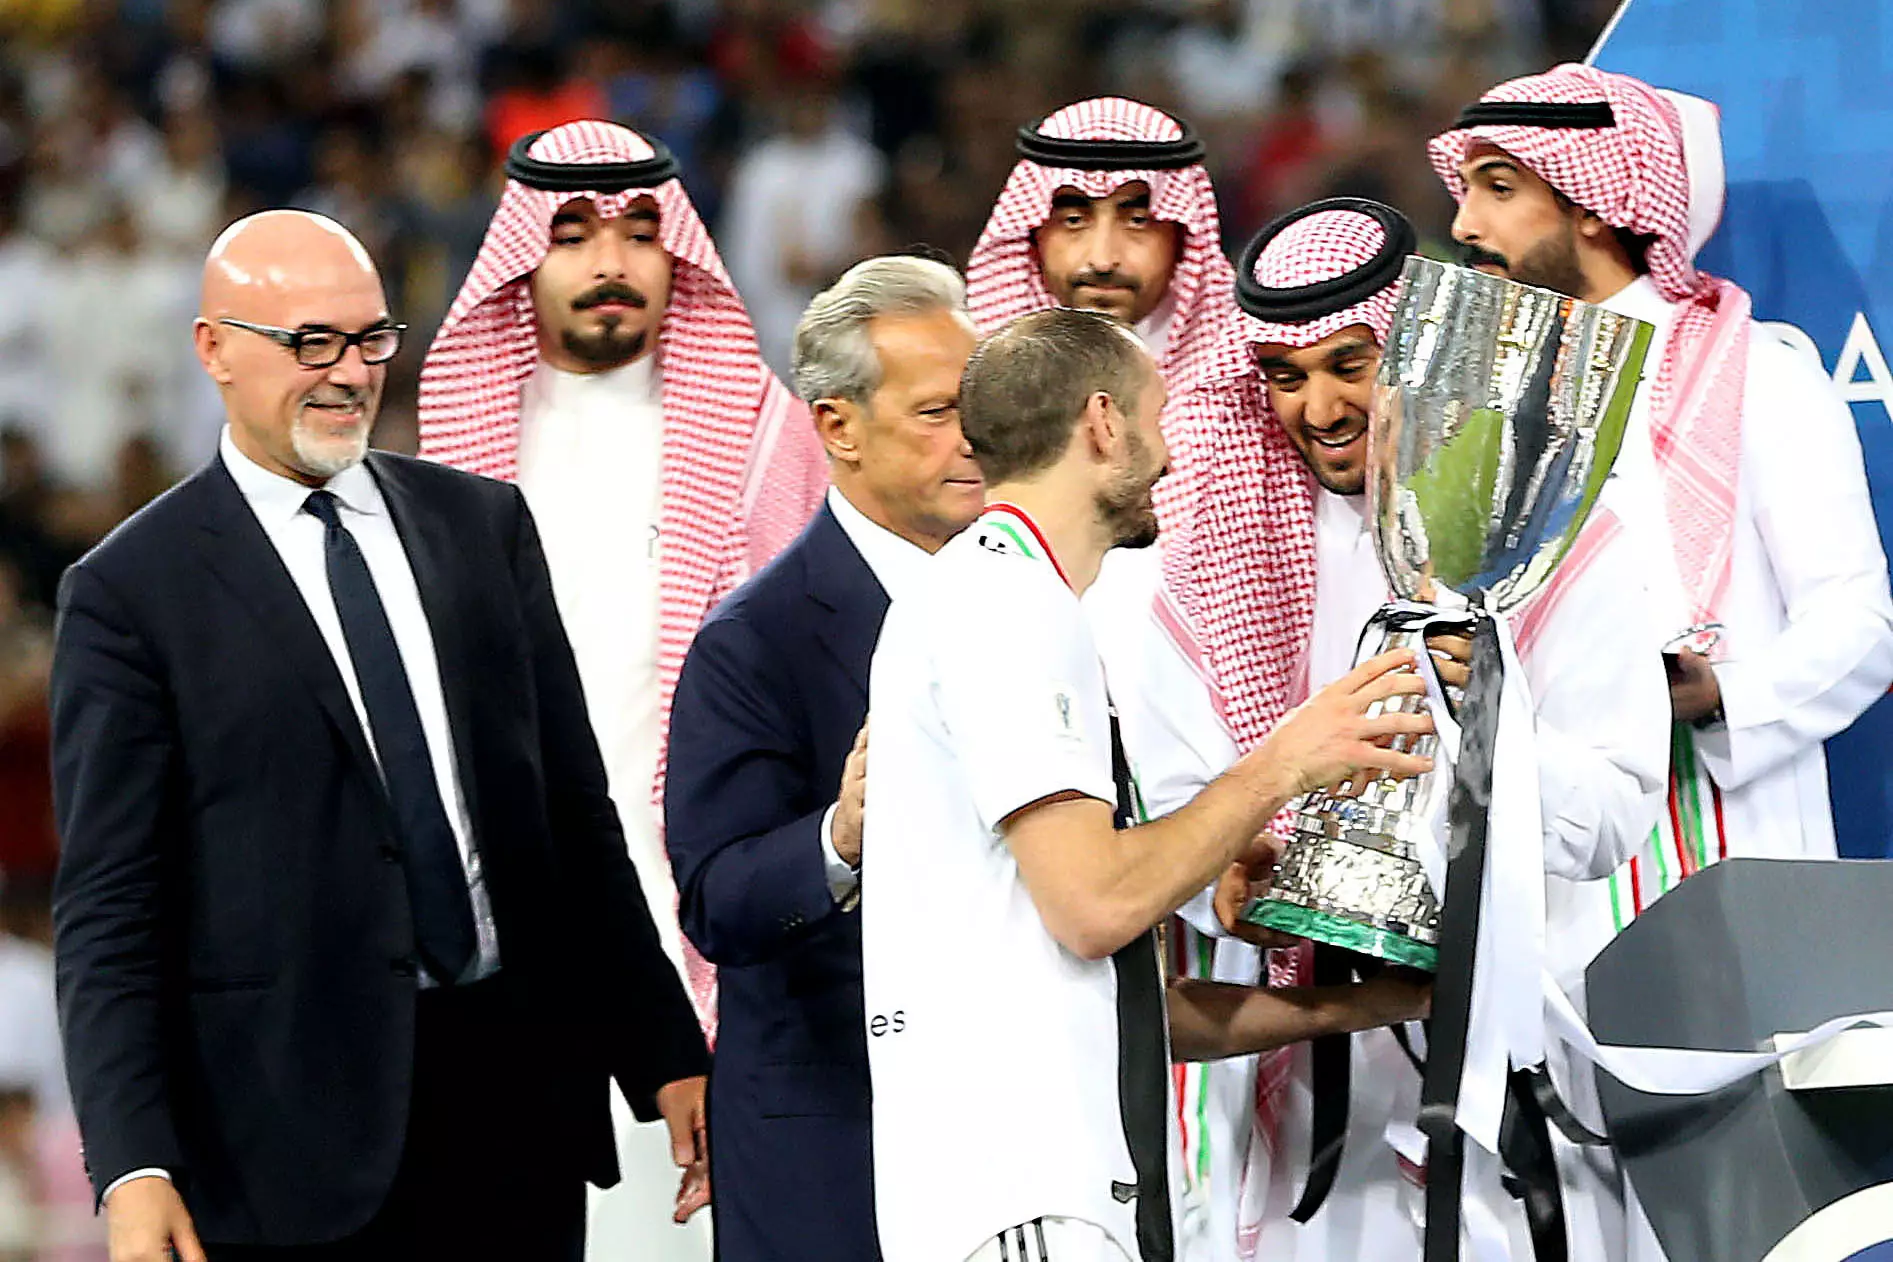 Juventus won the Italian Super Cup against AC Milan in January 2019 in Saudi Arabia. Image: PA Images